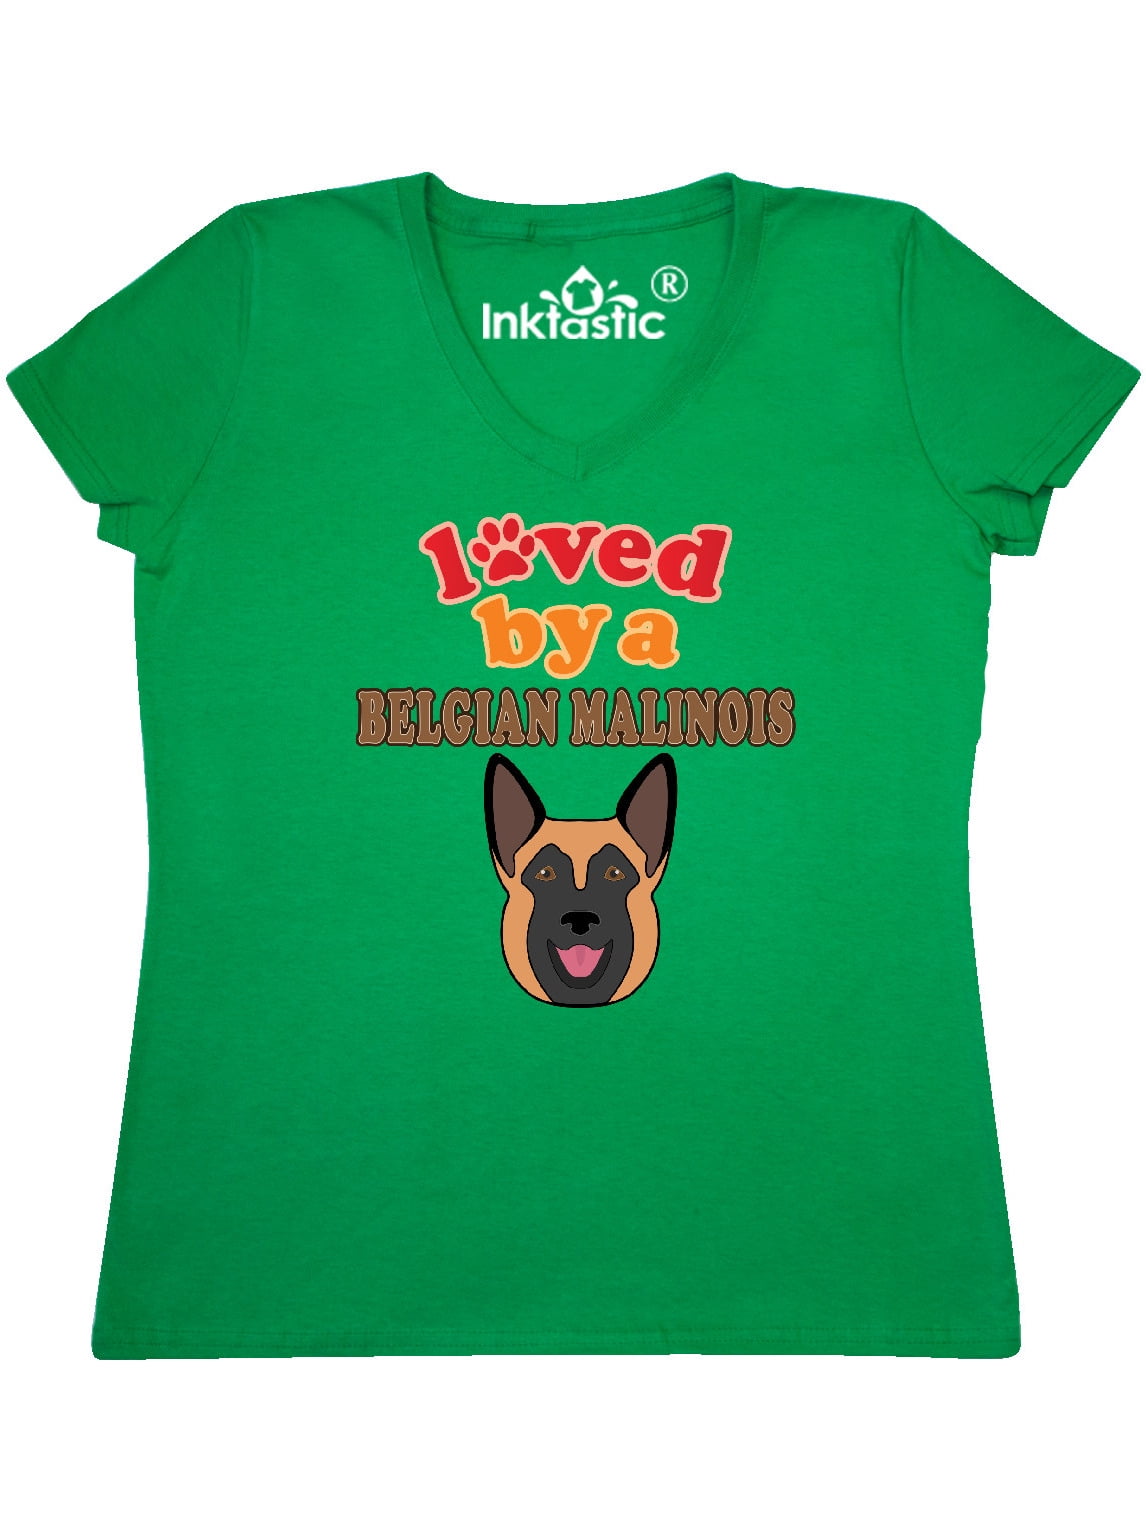 Belgian Shepherd Malinois Dog Love Hearts Toddler Baby Kid T-Shirt Tee Lavender 5/6T 